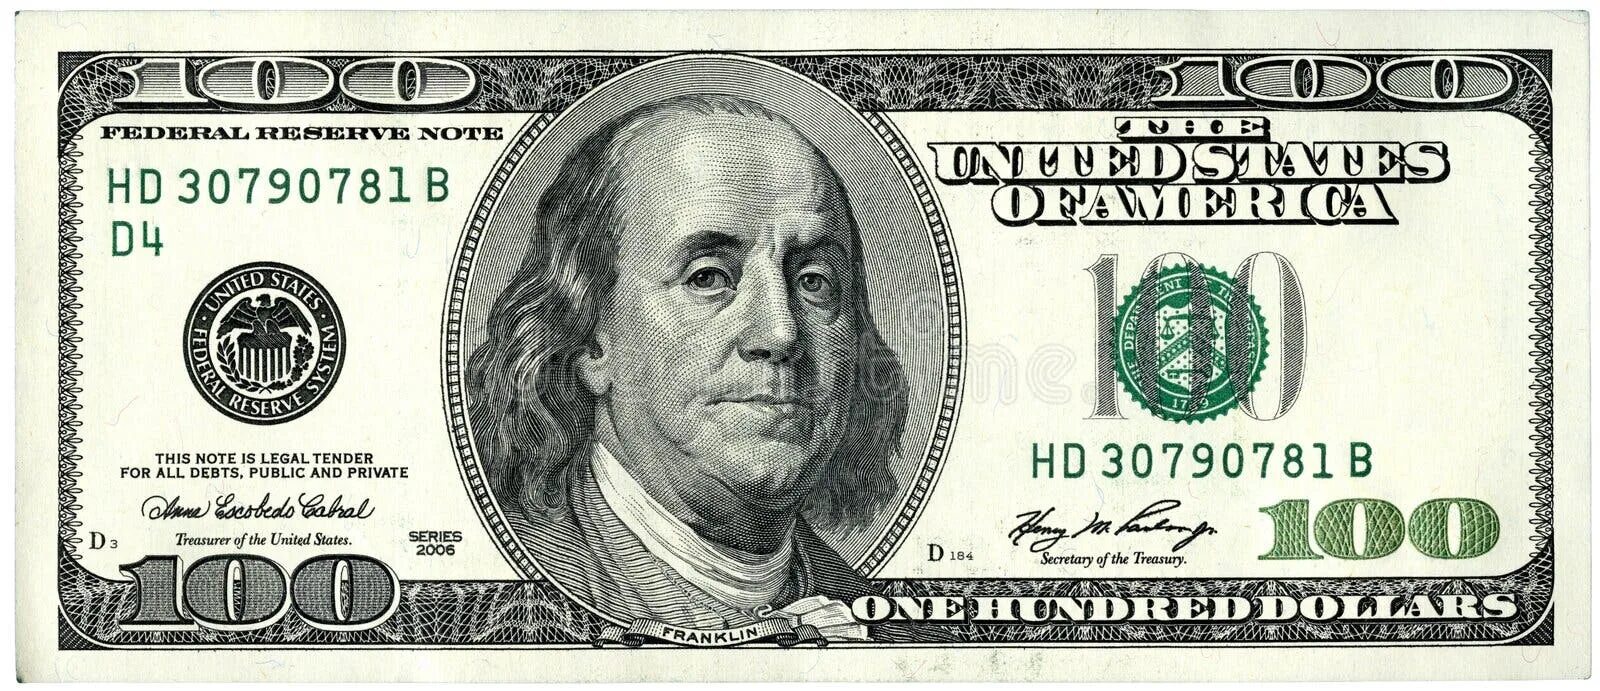 Франклин купюра. Бенджамин Франклин на 100 долларах. Бенджамин Франклин купюра. Франклин доллар купюра. Франклин на 100 долларовой купюре.